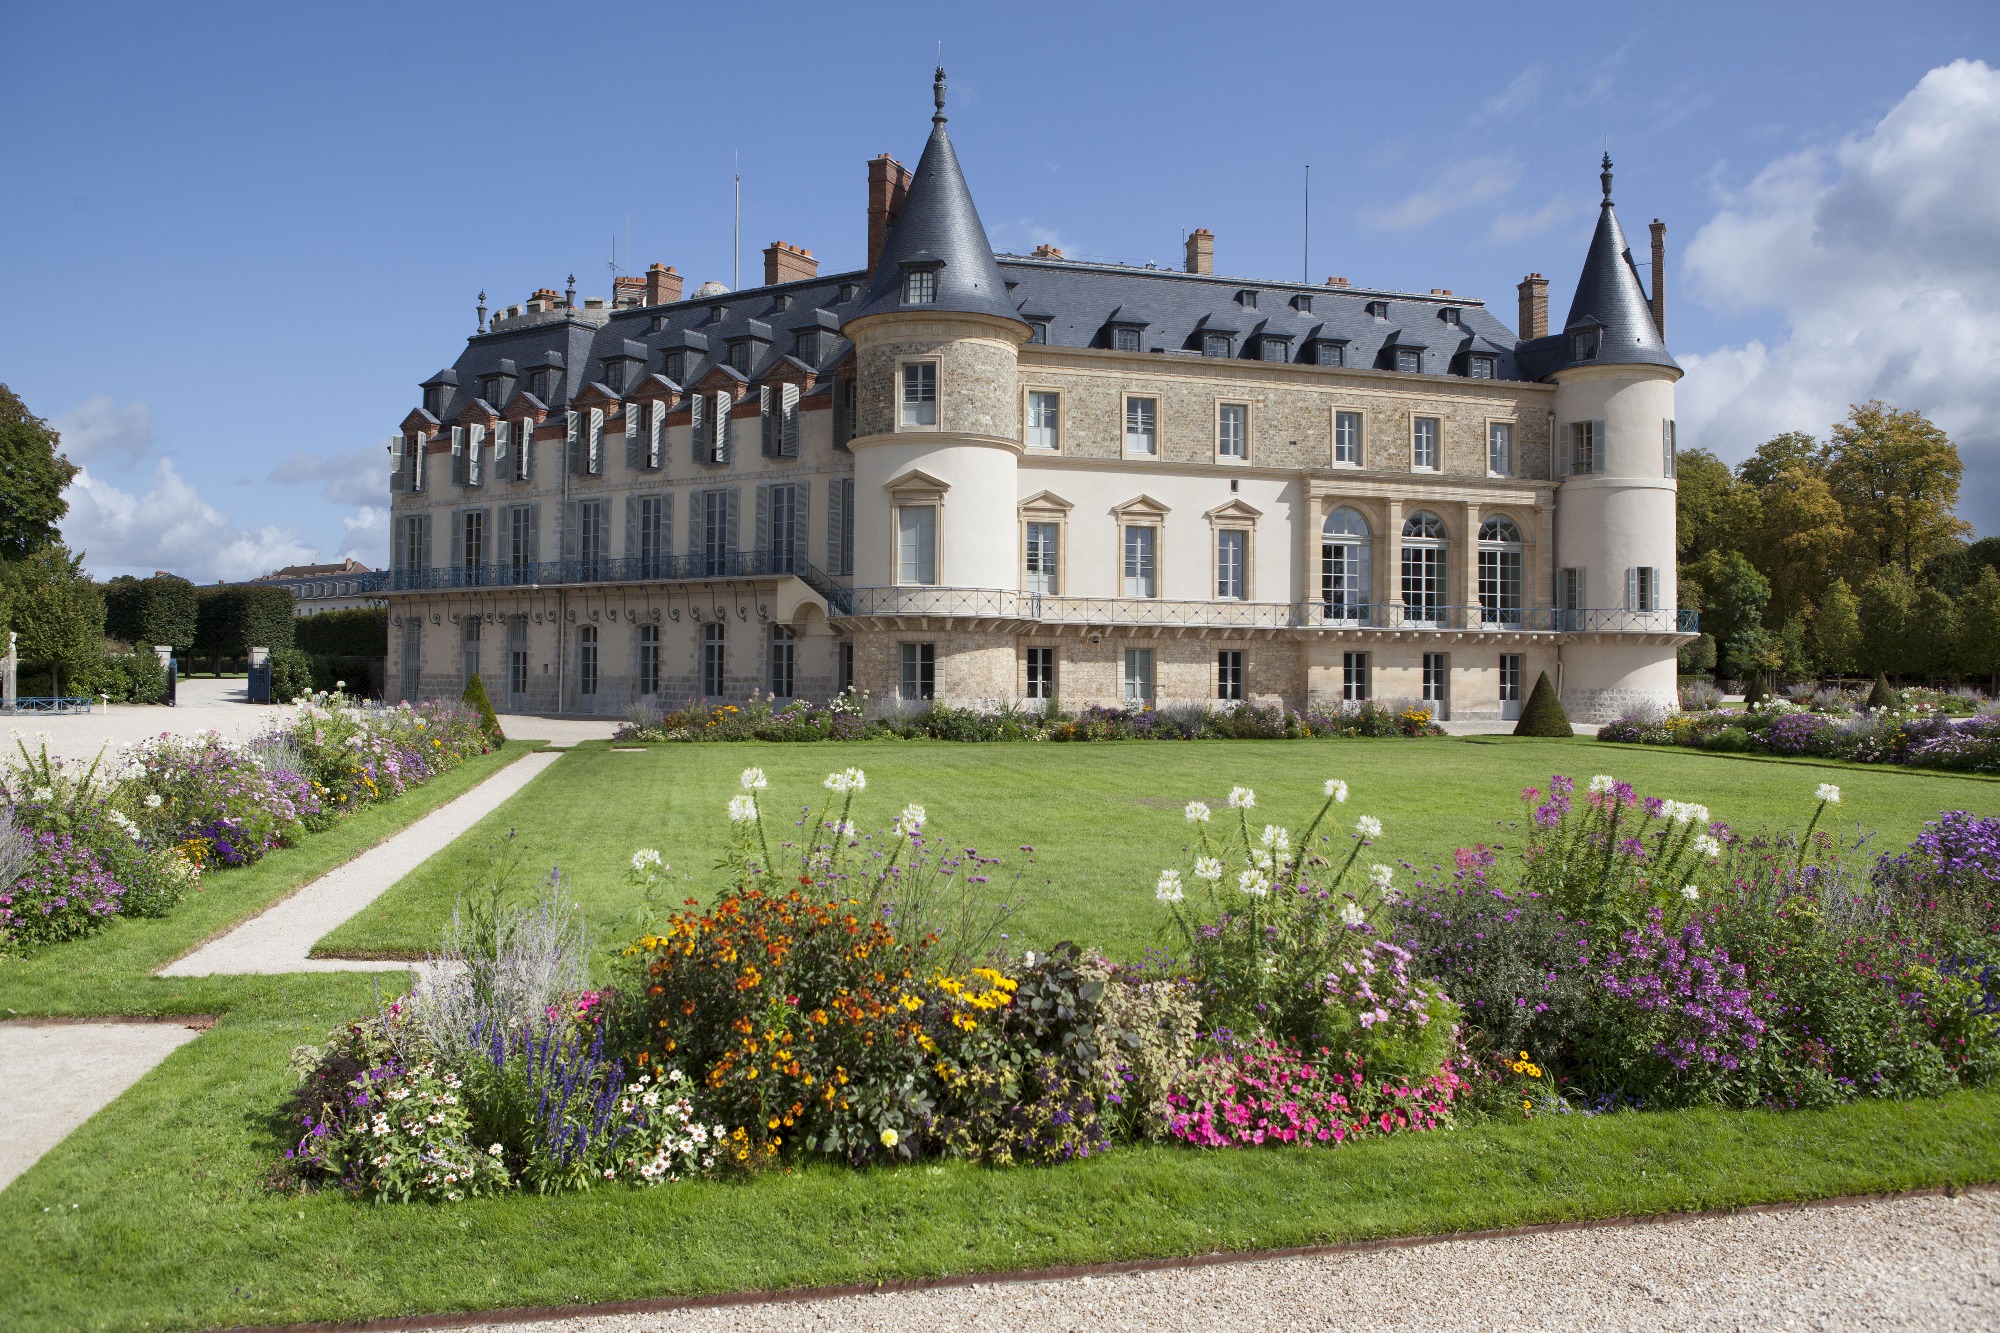 Château de Rambouillet façade sur le jardin et façade sur le grand canal